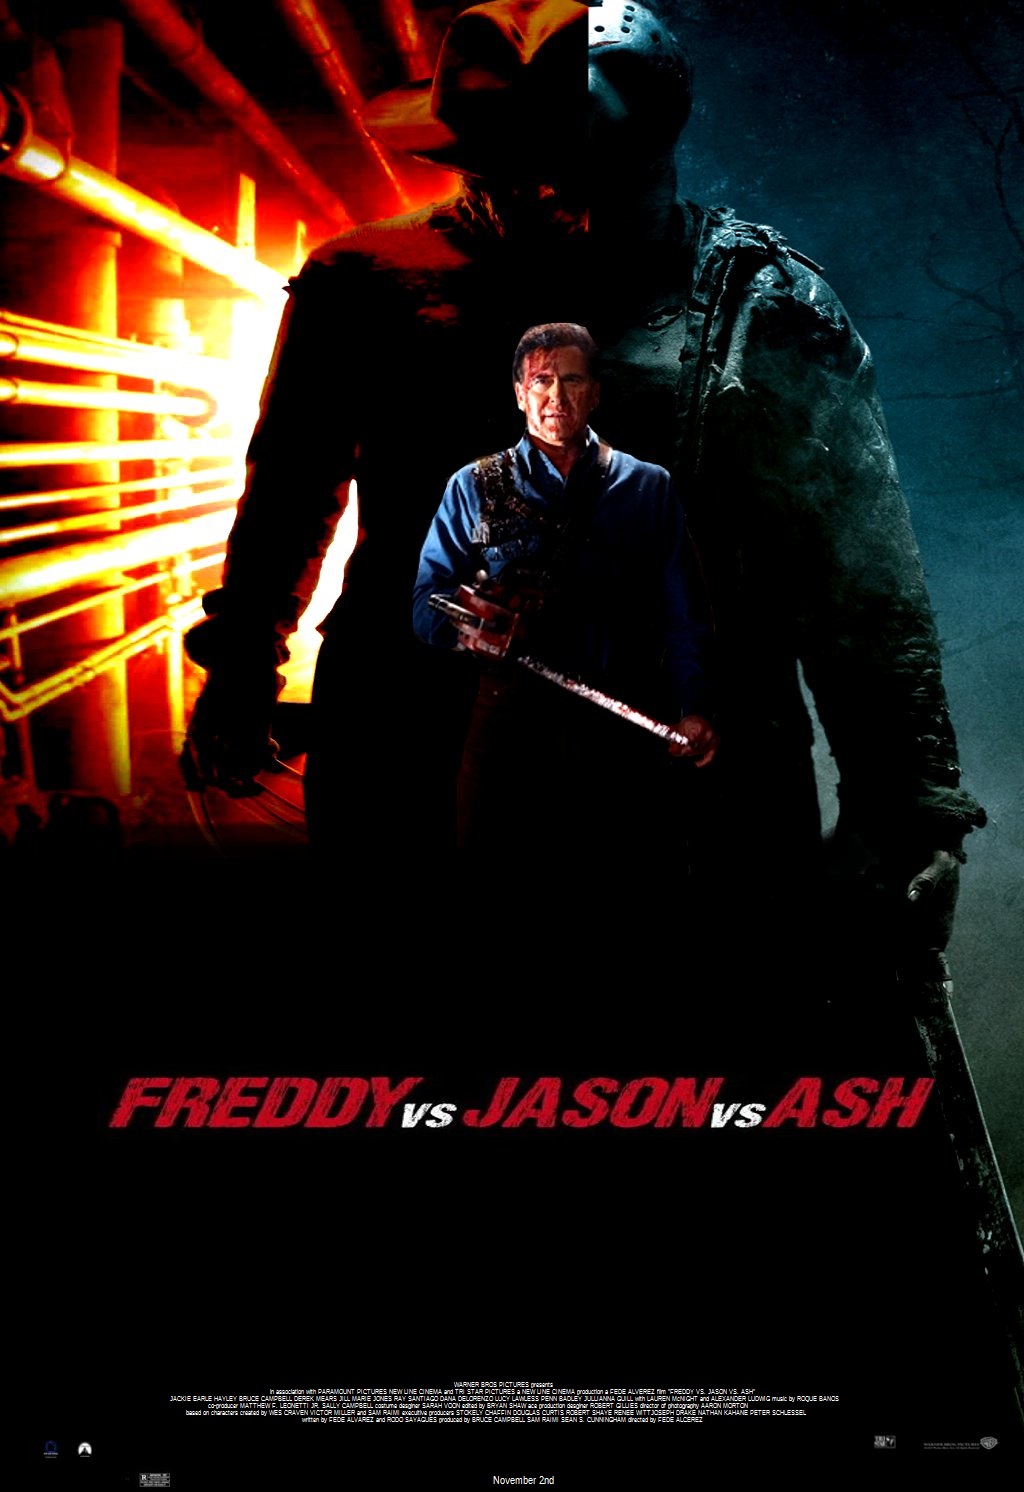 Freddy Vs Jason Vs Ash Movie Poster By Steveirwinfan96 On Deviantart